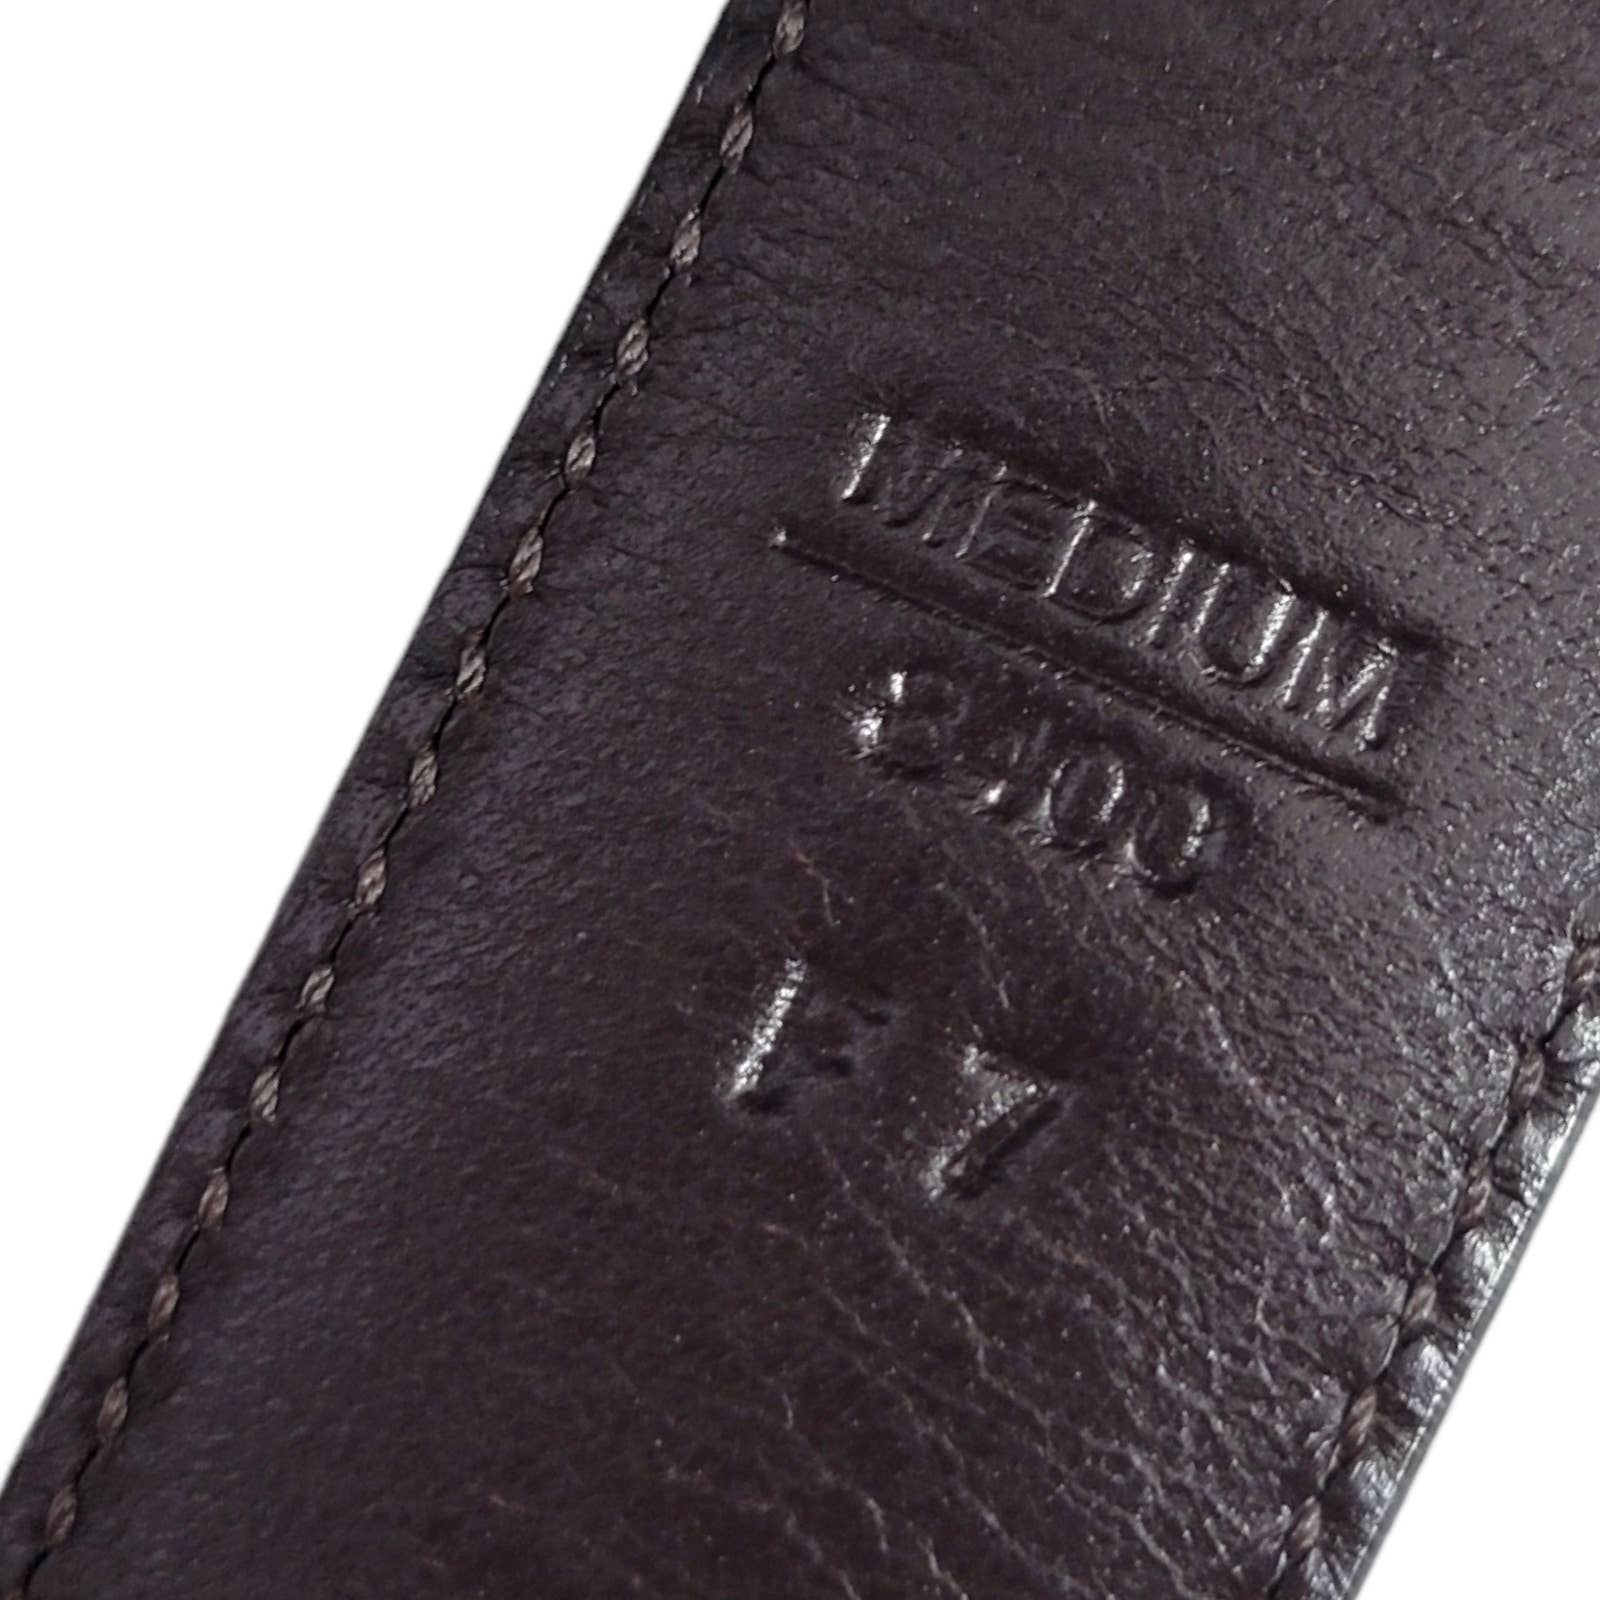 Vintage Coach Belt Brown Cognac Smooth Leather 8400 Brass Buckle Classic Size Medium